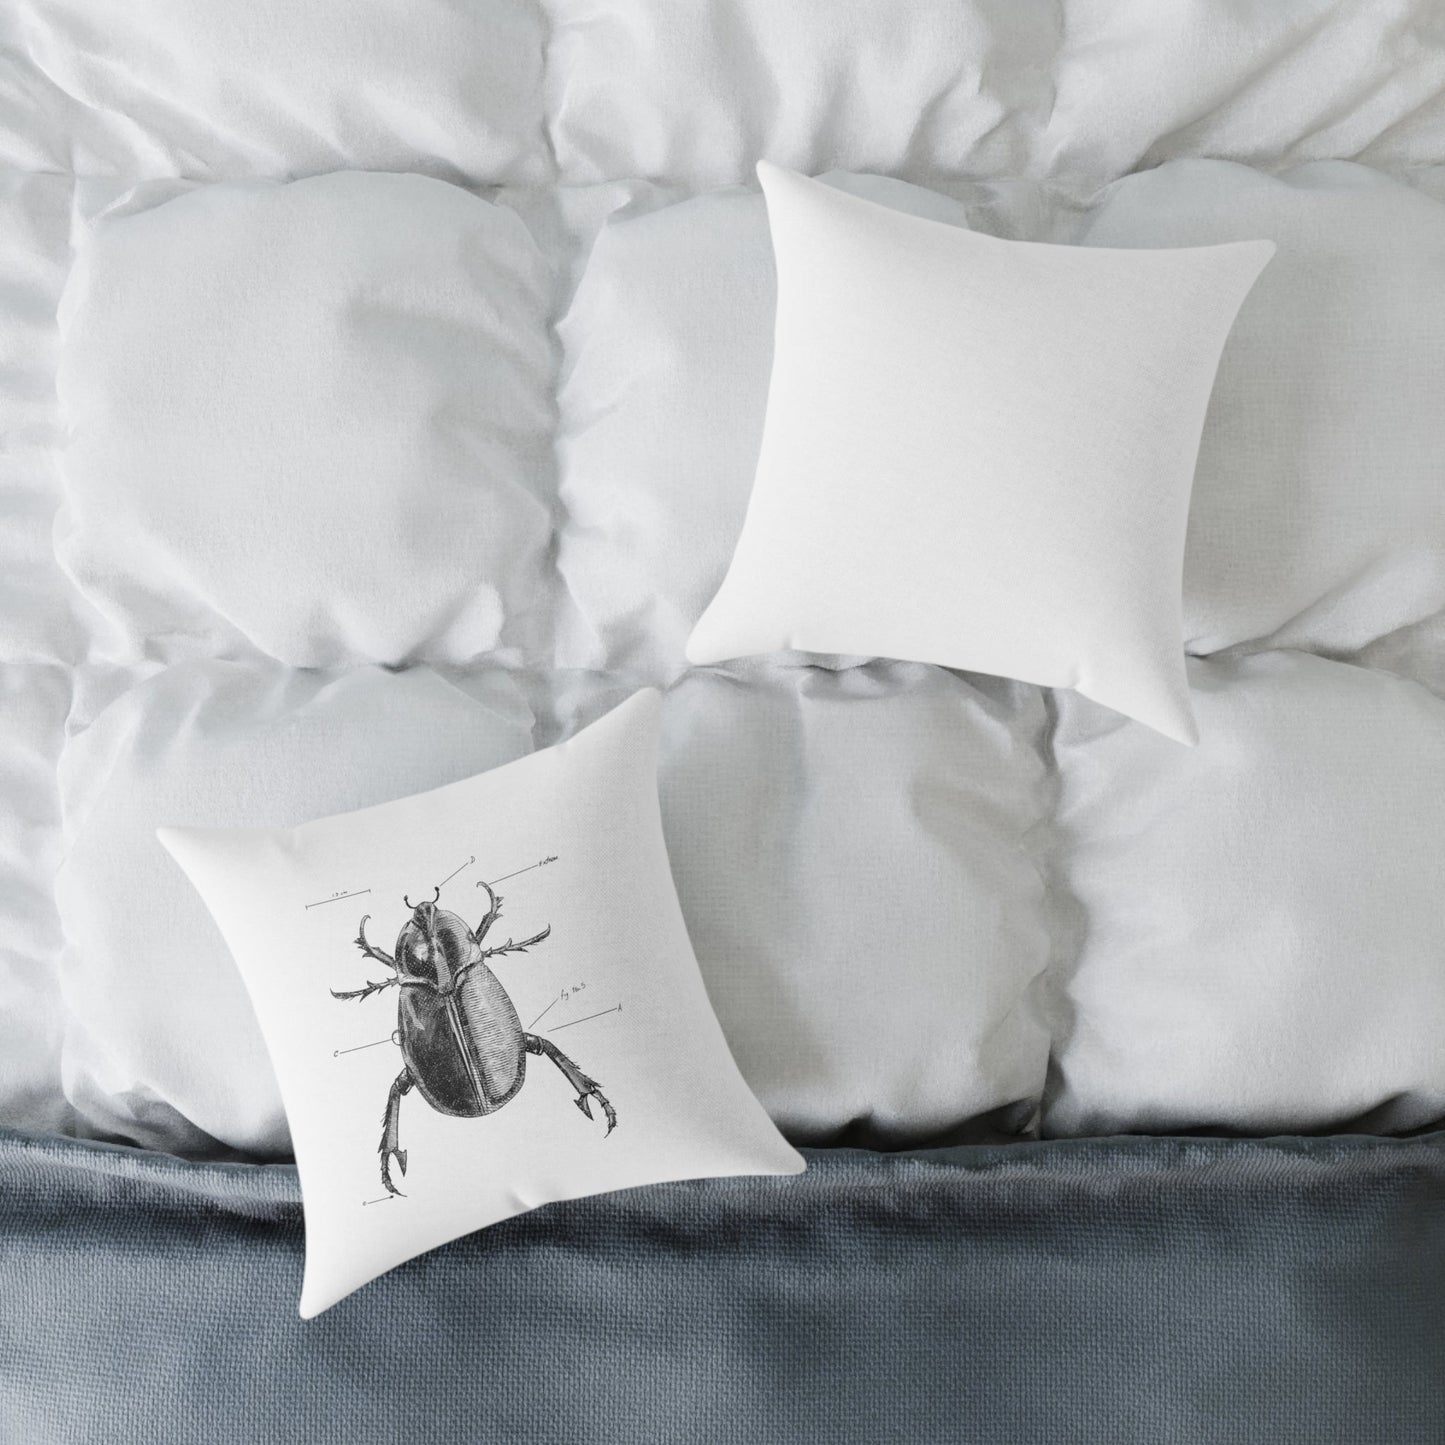 Brilliant Beetle Mania Pillow Cushion